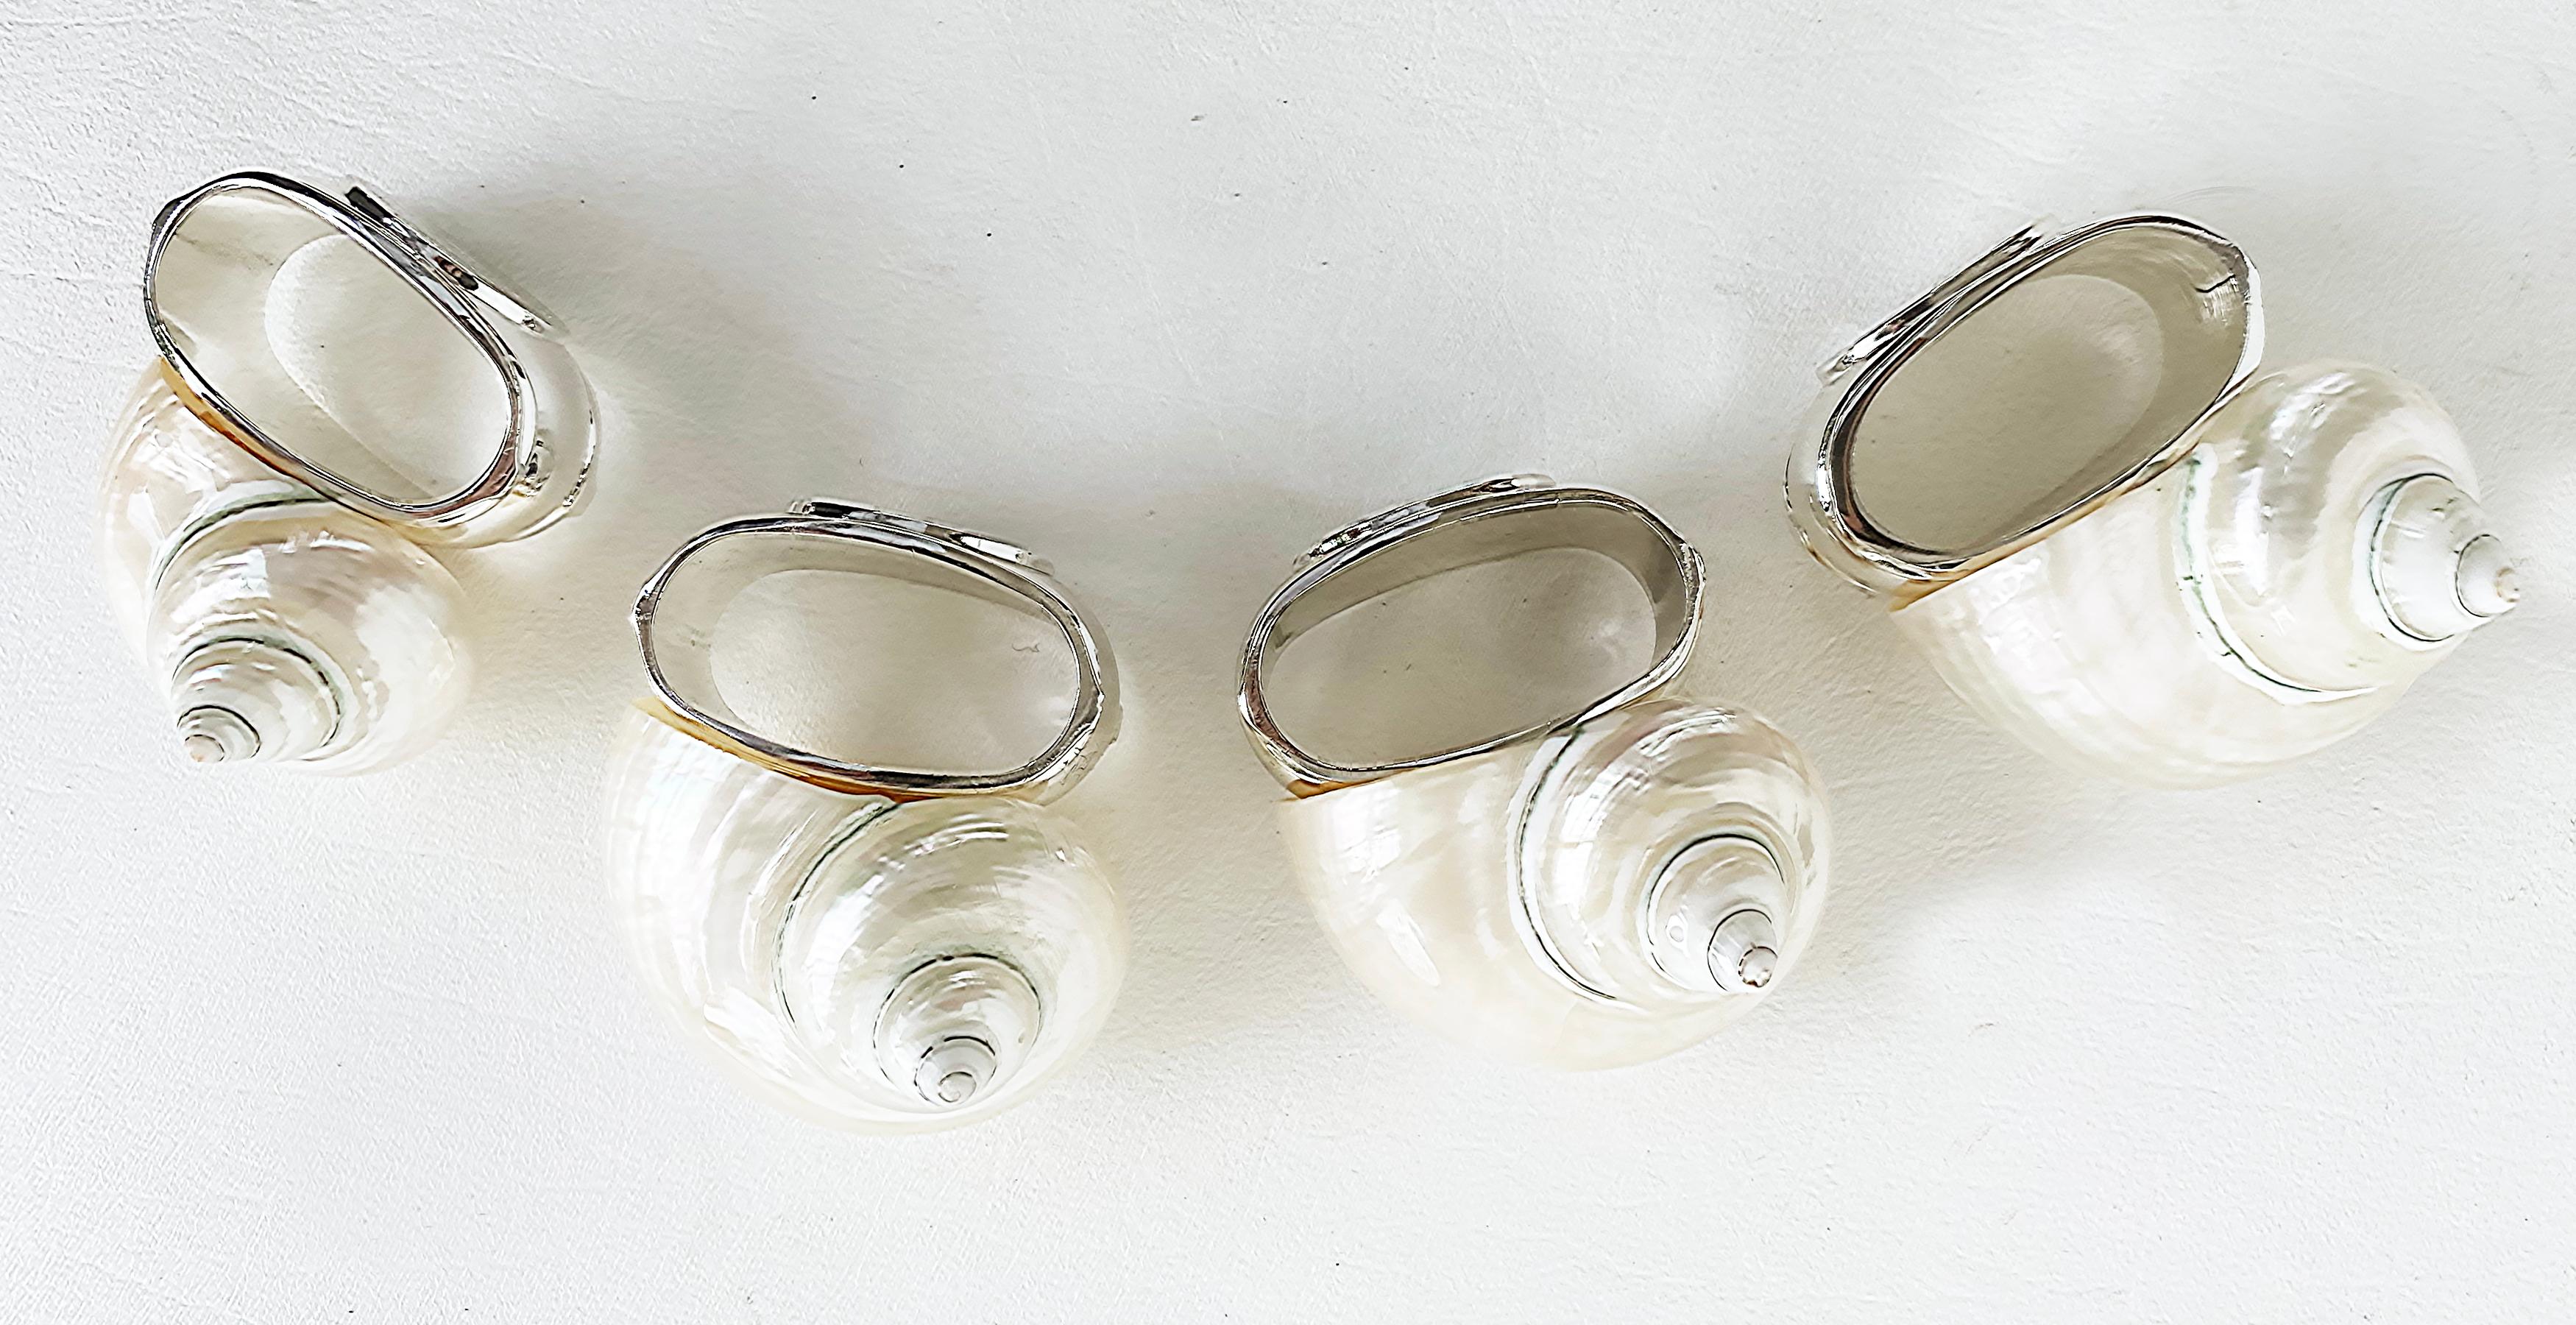 Organic Modern 4 Hans Turnwald Sea Shell Silverplate Napkin Rings with Original Box